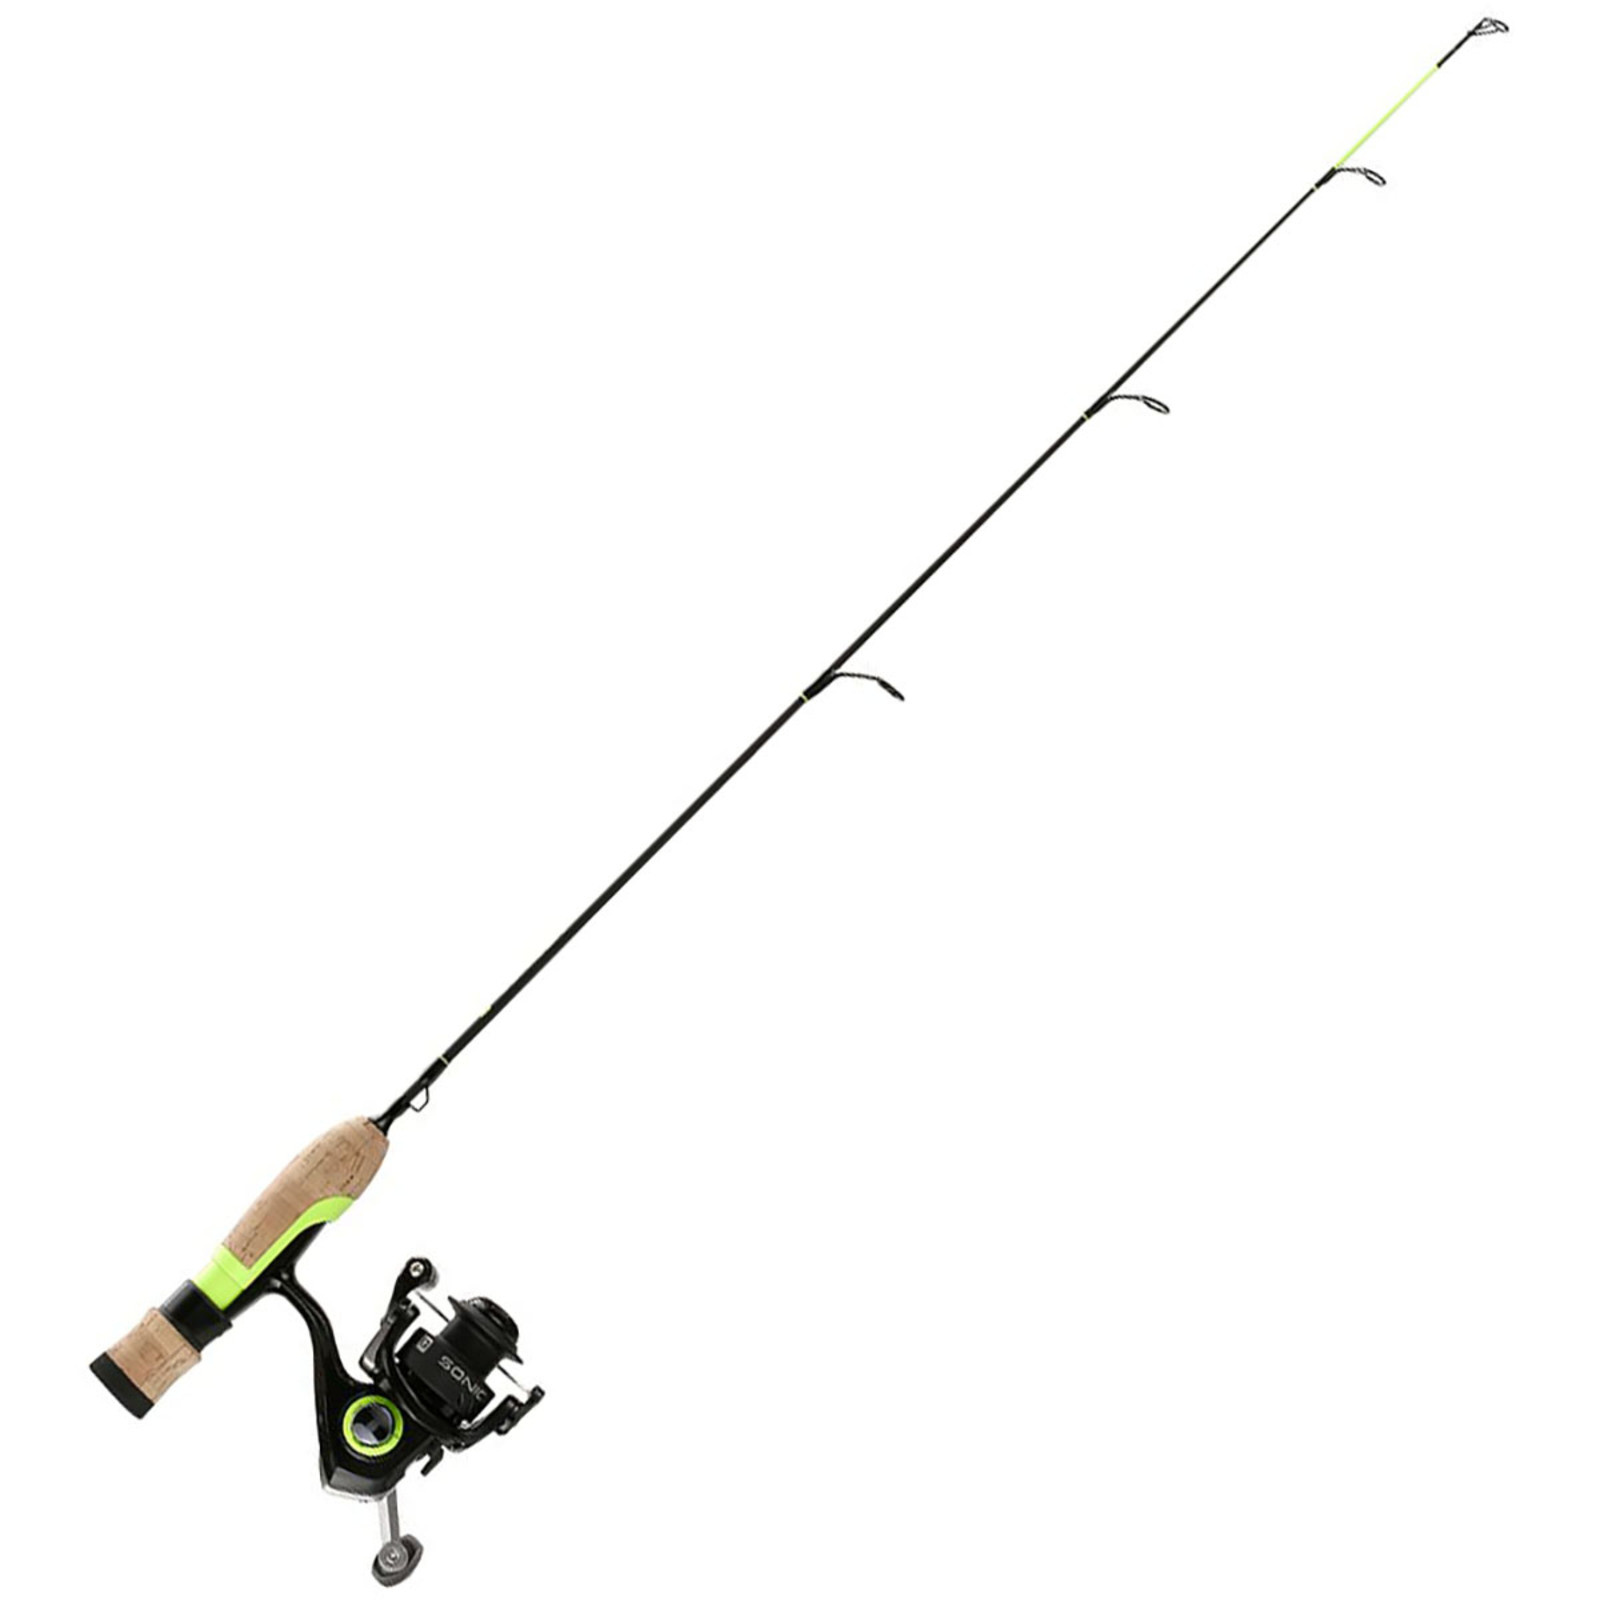 13 fishing Sonicor Ice Combo - Discount Fishing Tackle